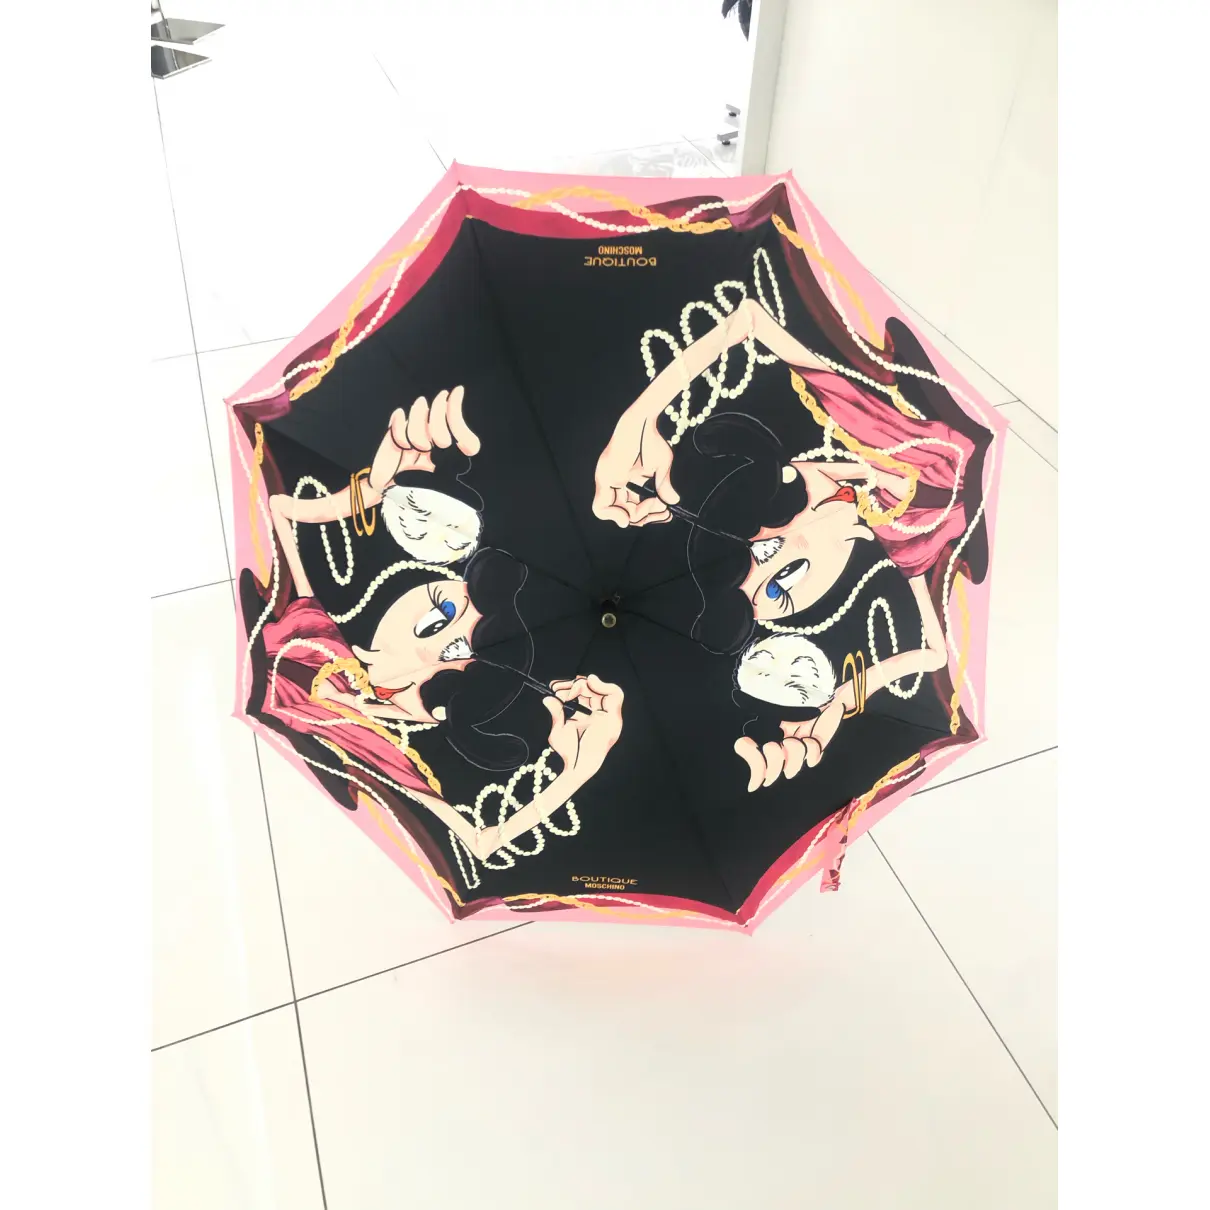 Buy Moschino Umbrella online